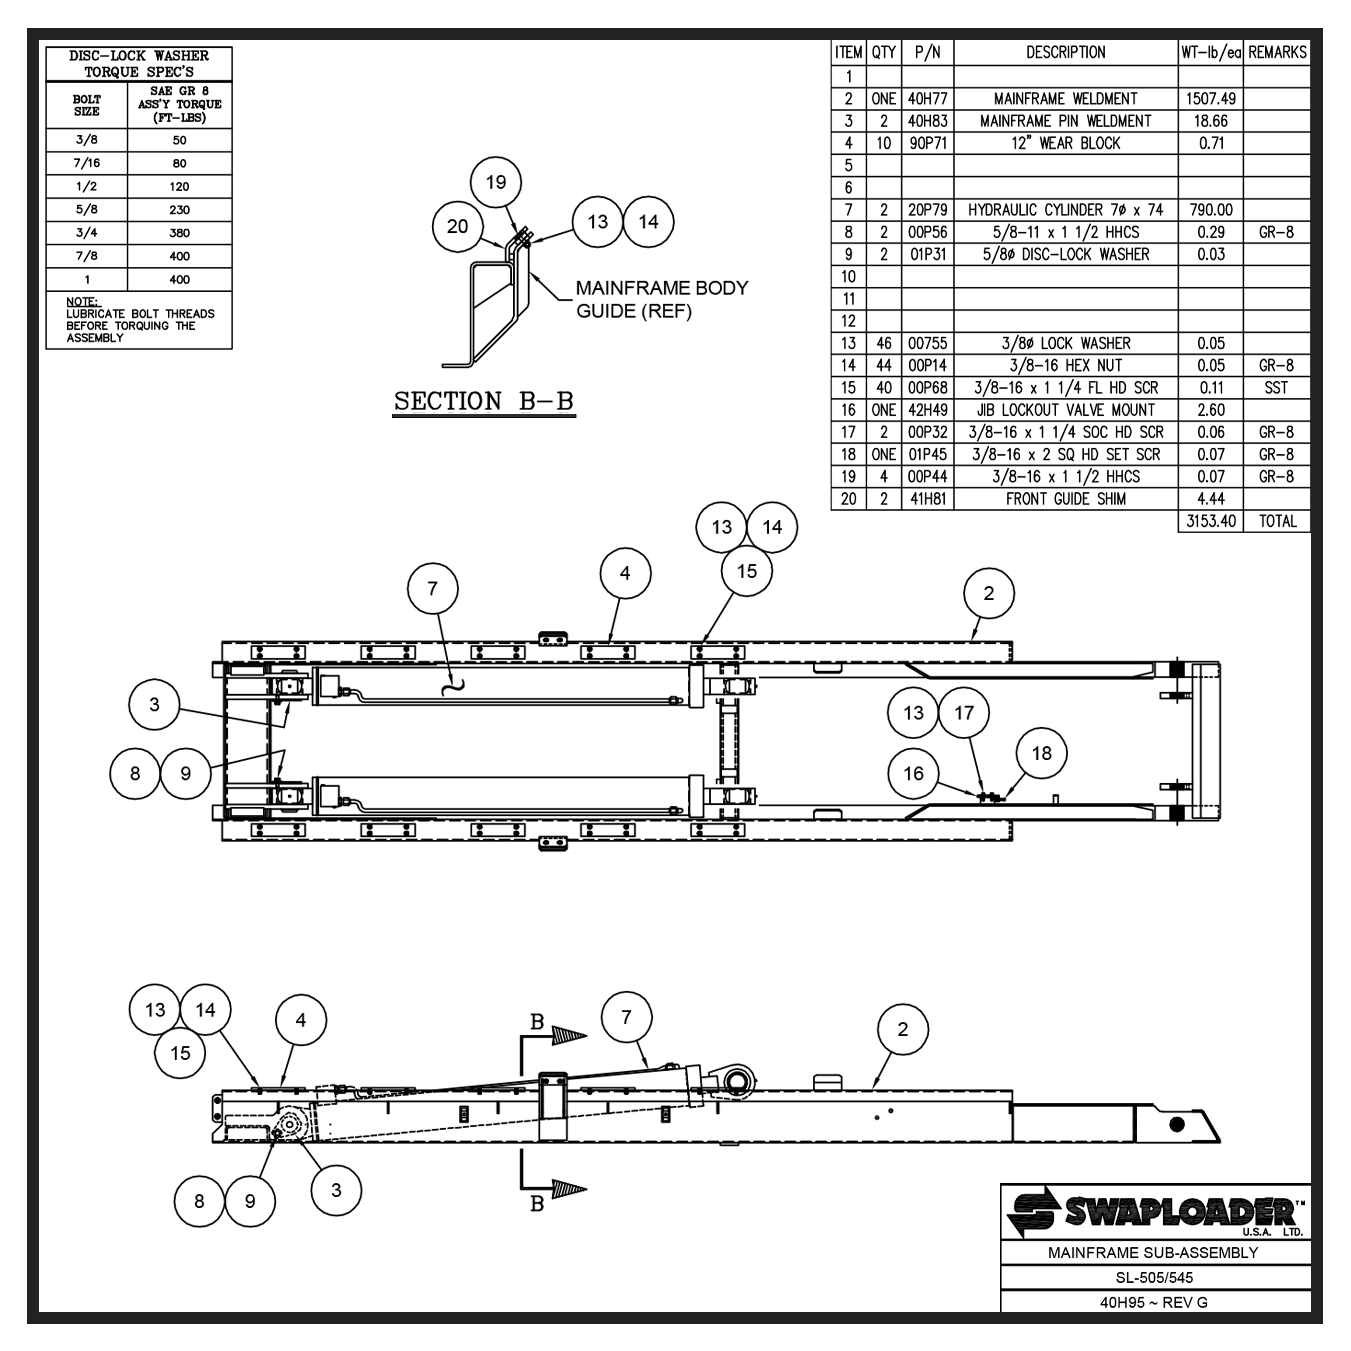 Swaploader SL-505/545 Main Frame Sub-Assembly Diagram